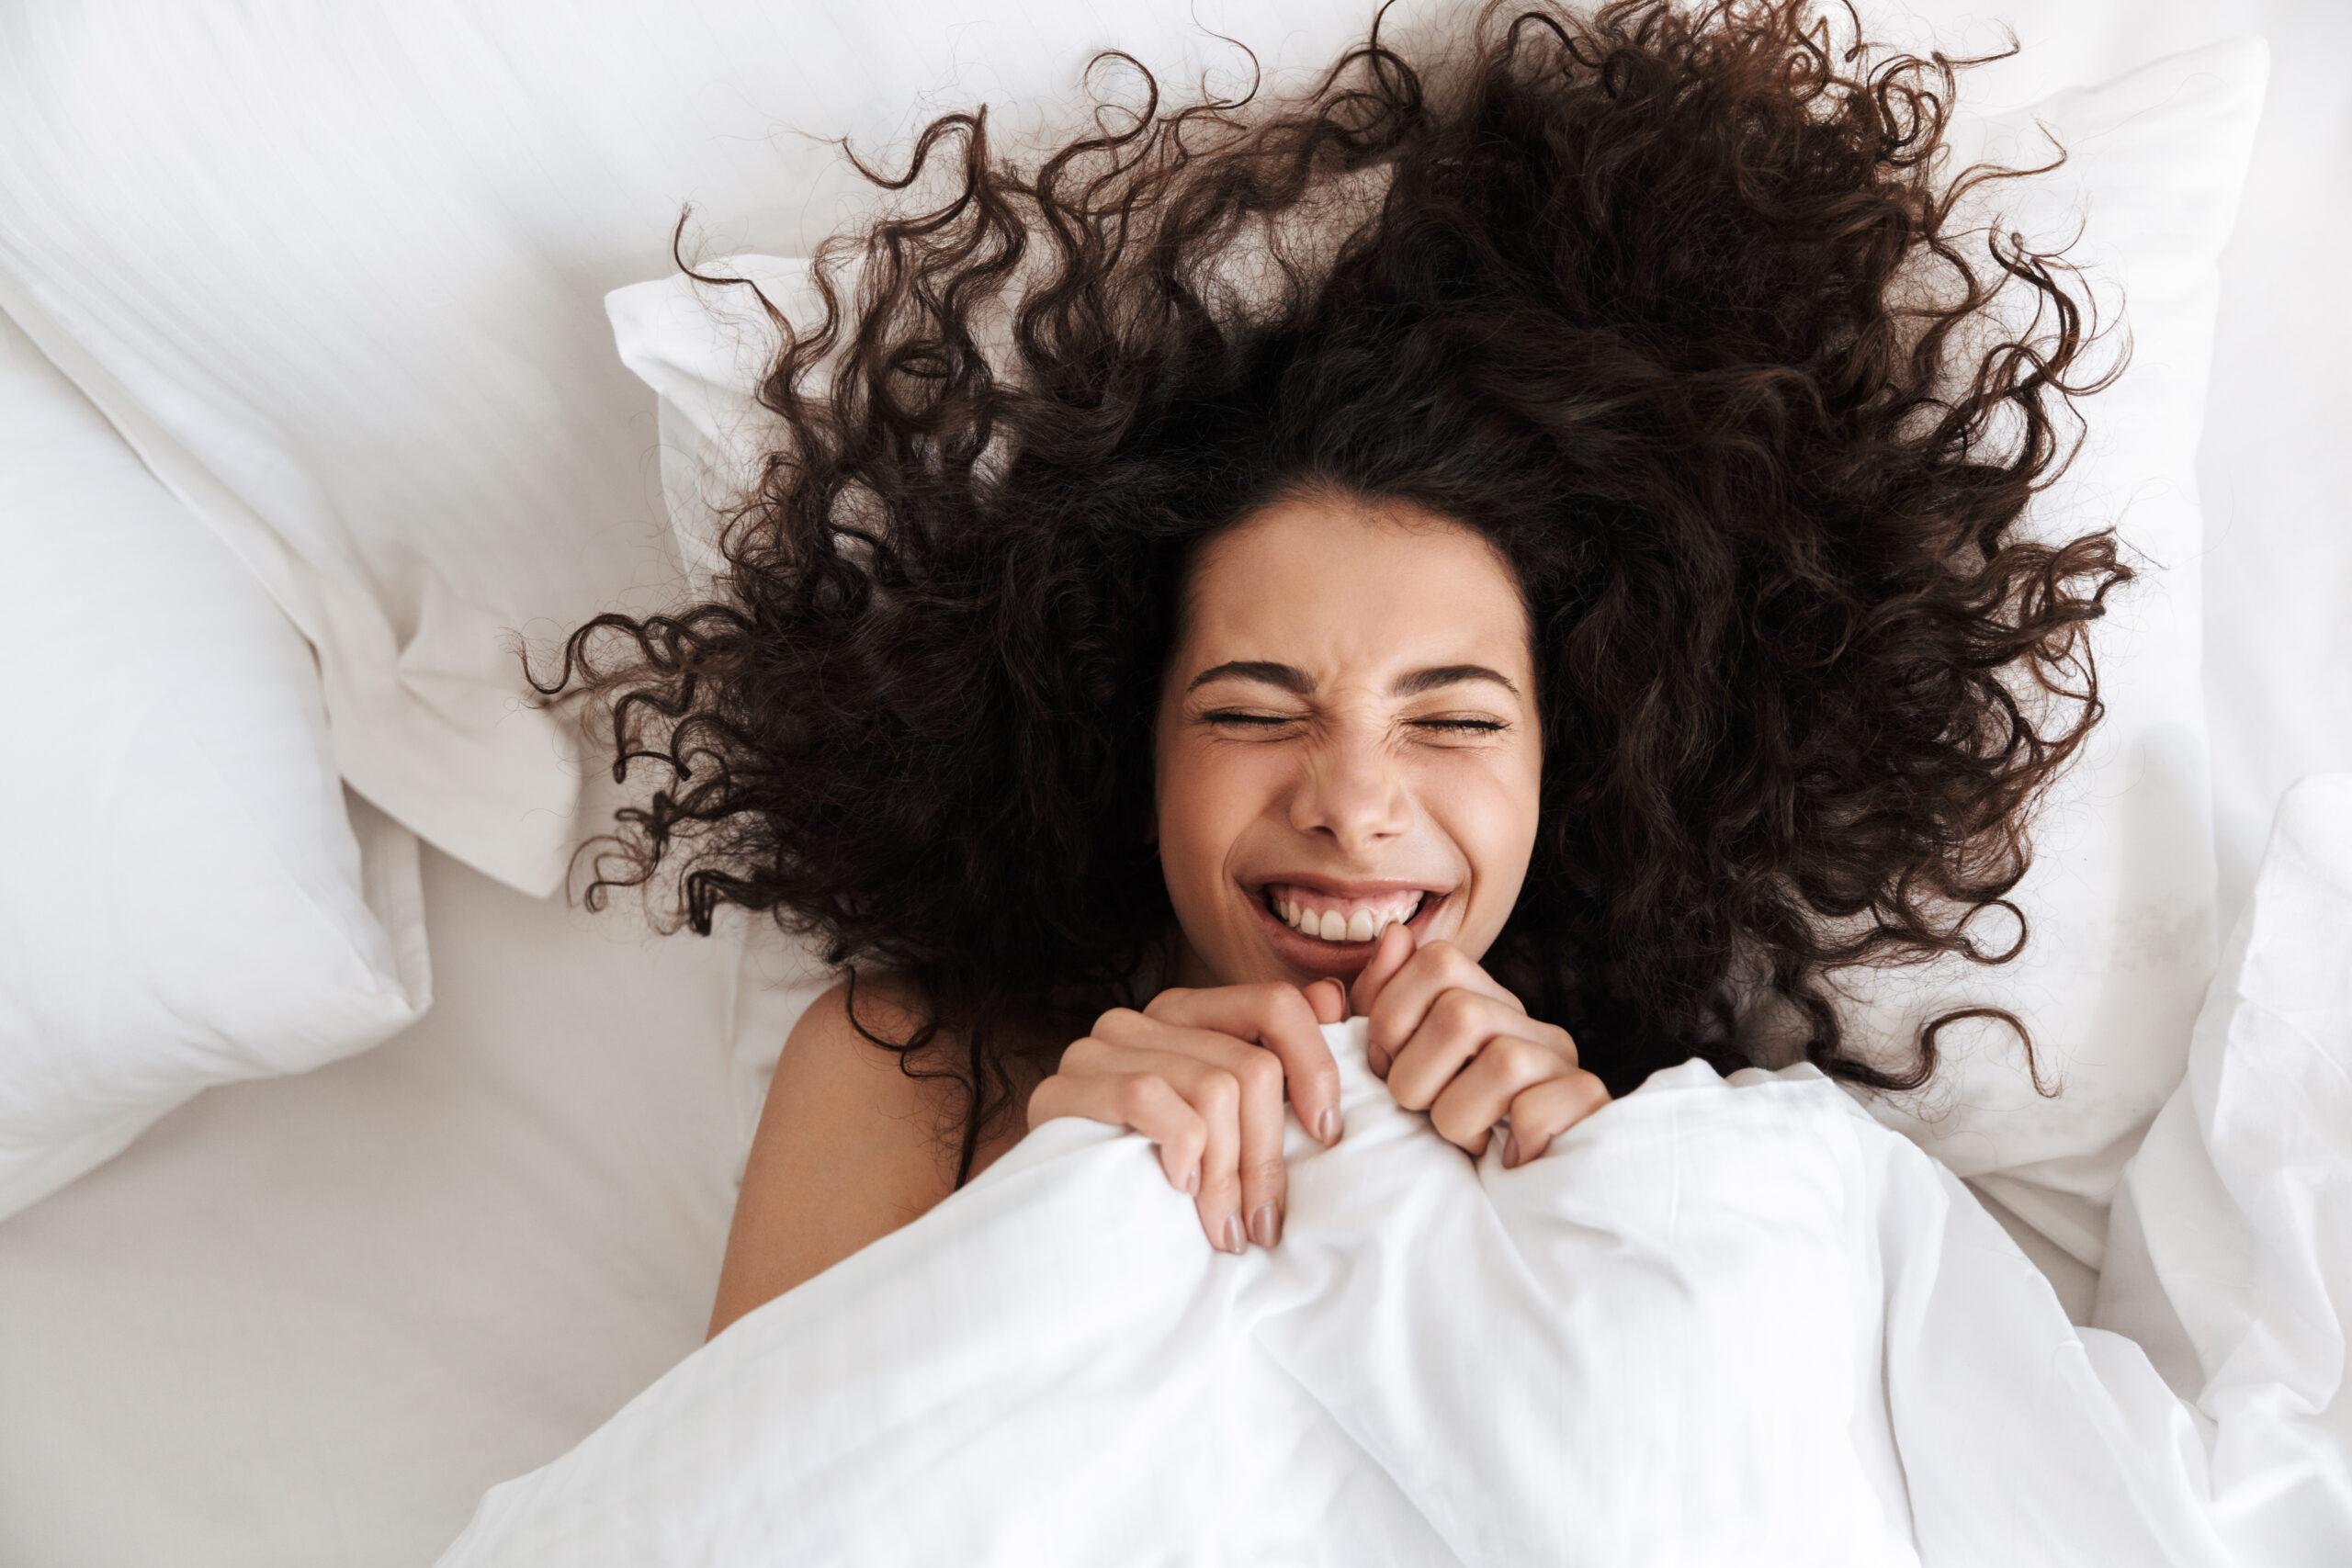 5 Ways a Custom Occlusal Guard Can Protect Your Teeth While You Sleep